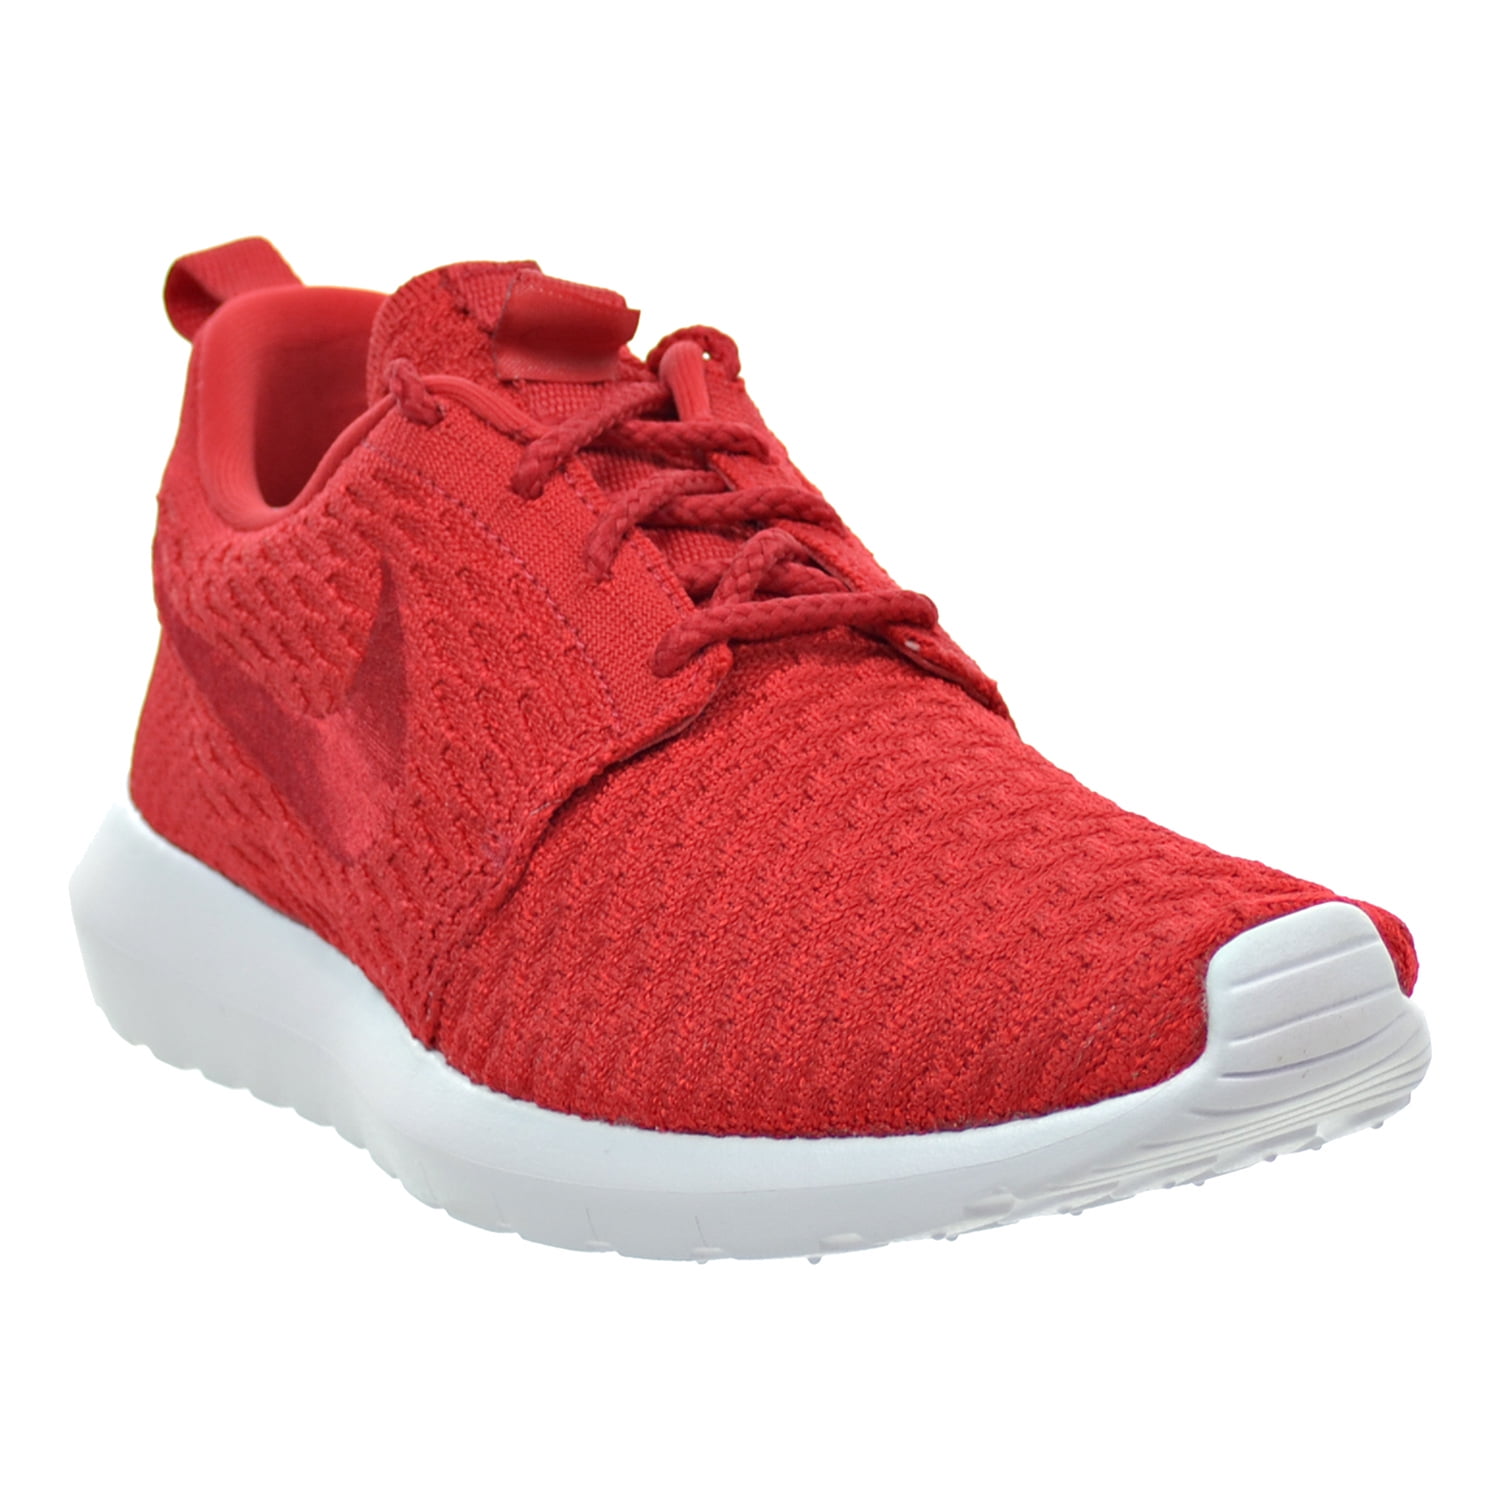 Nike NM Flyknit Men's Shoes University Red/White 677243-603 (10 D(M) US) -